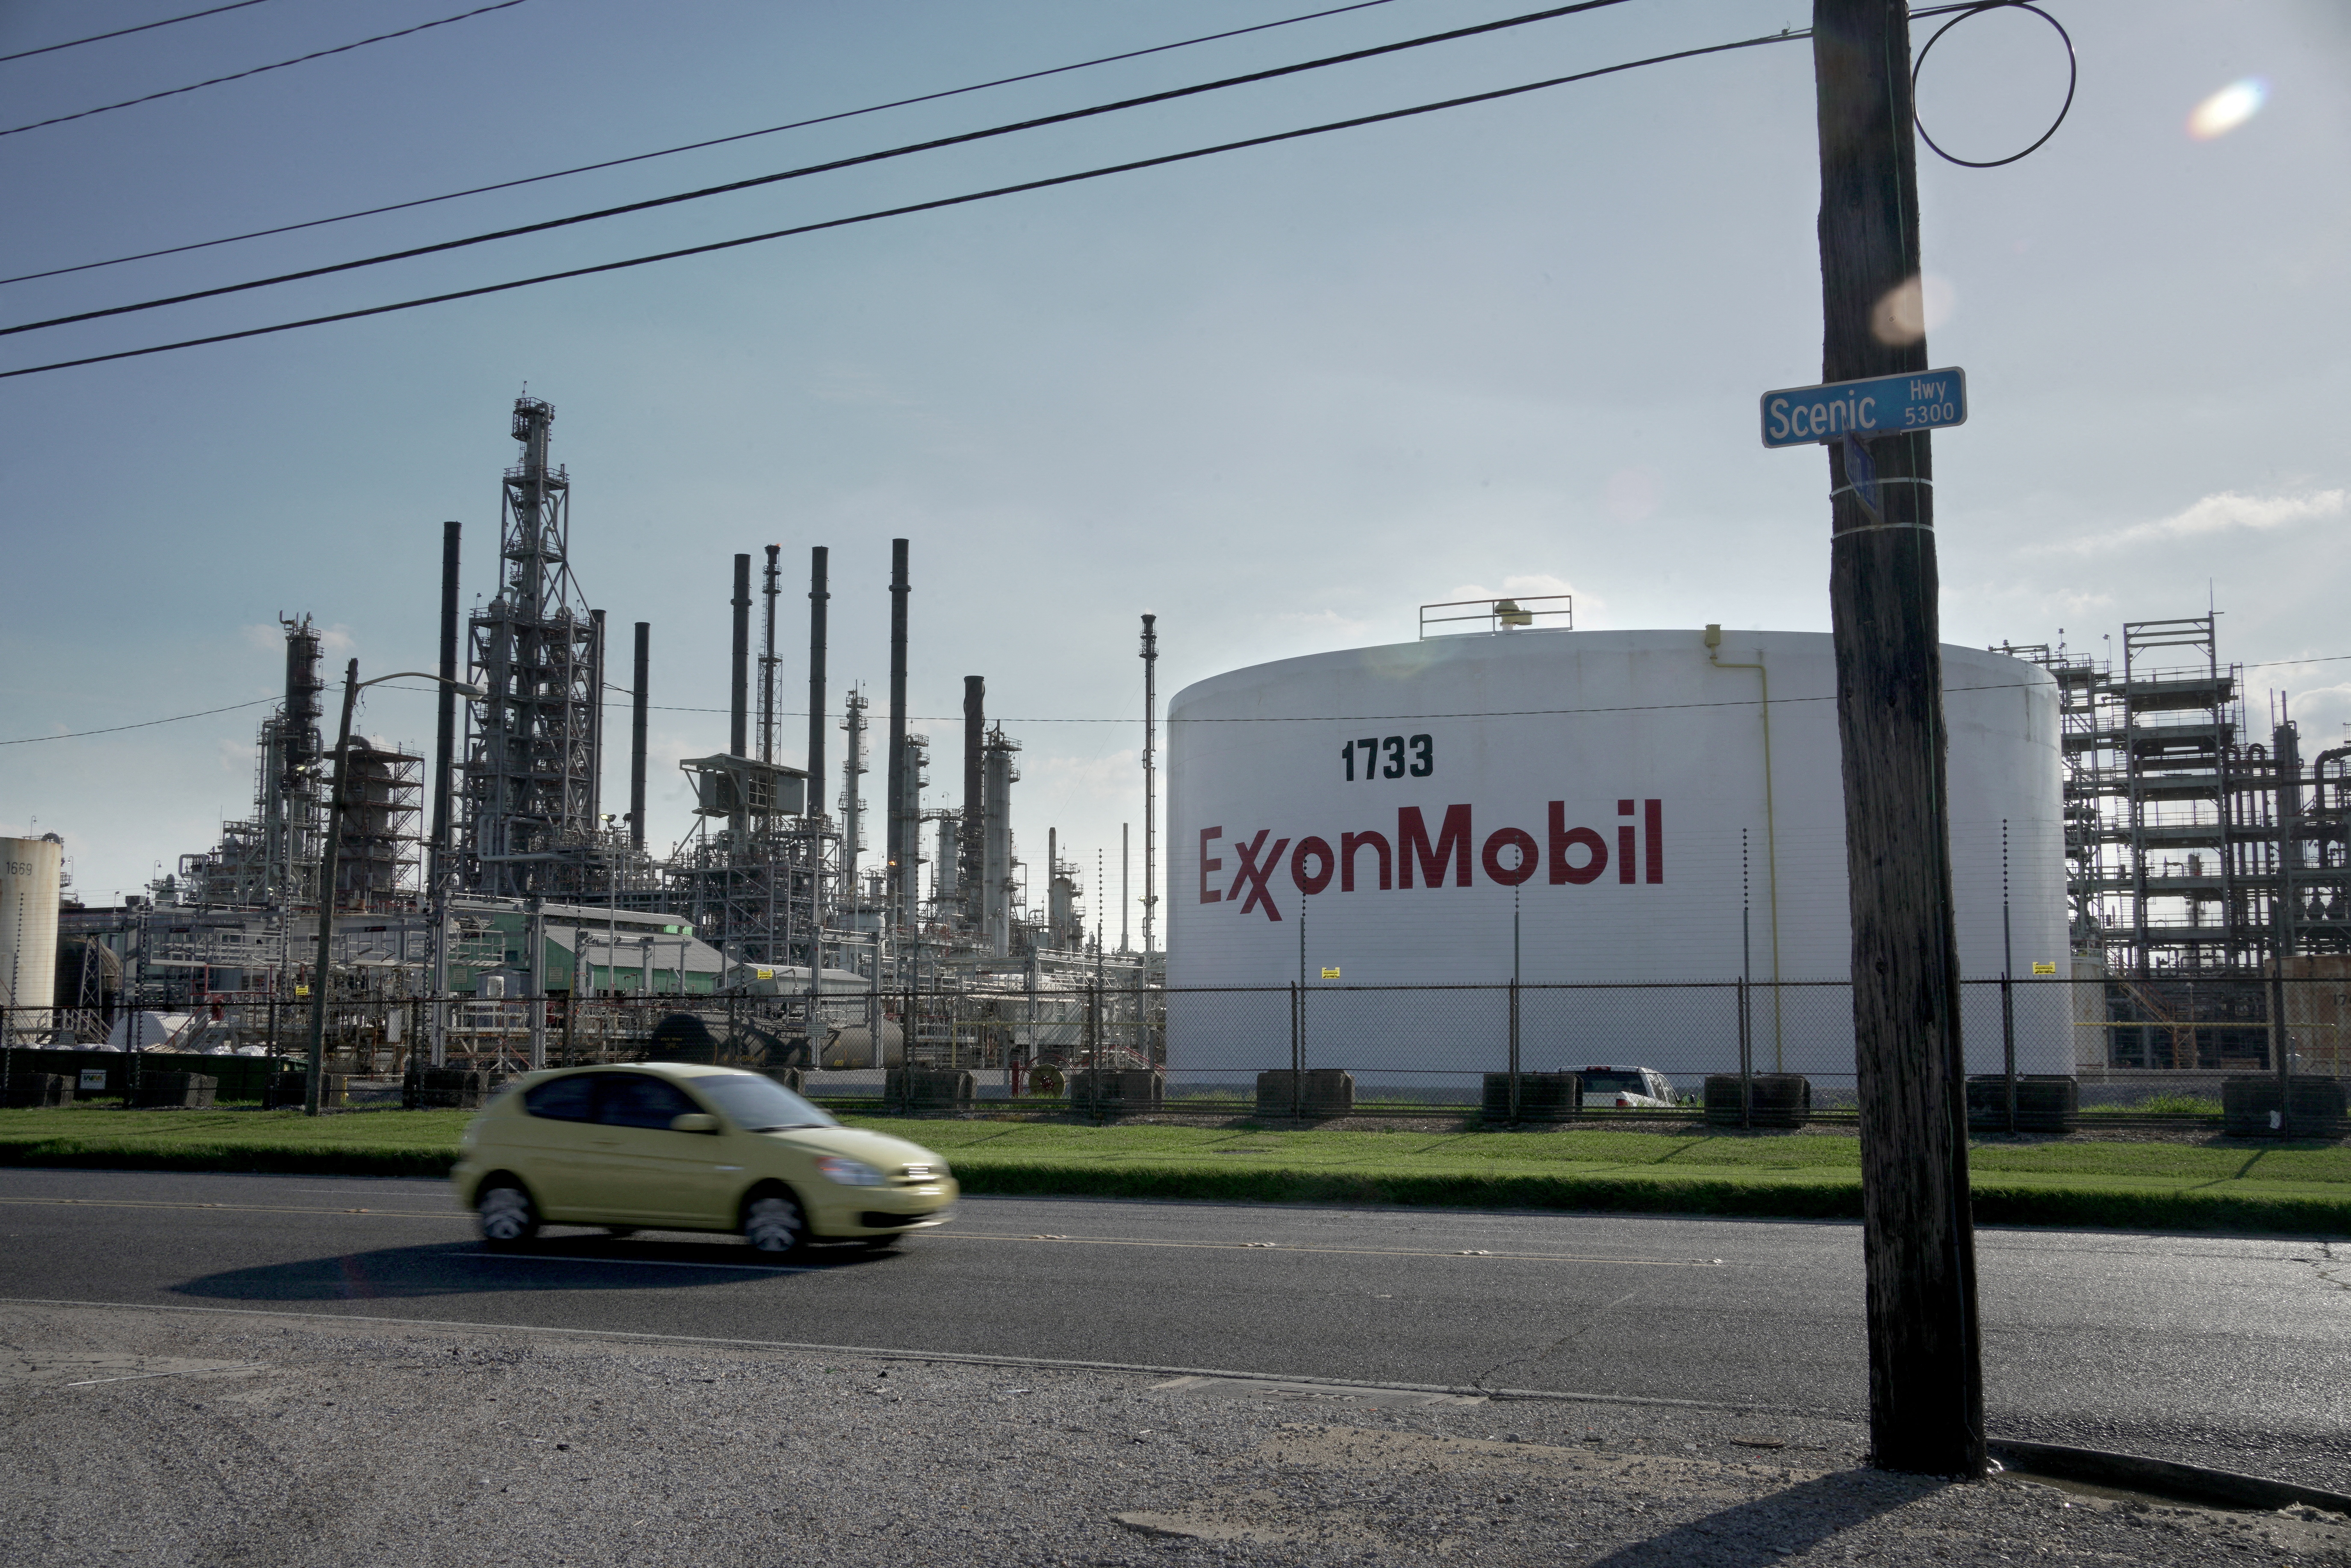 Exxon's U.S. oil refineries pump out more soot than rivals' plants